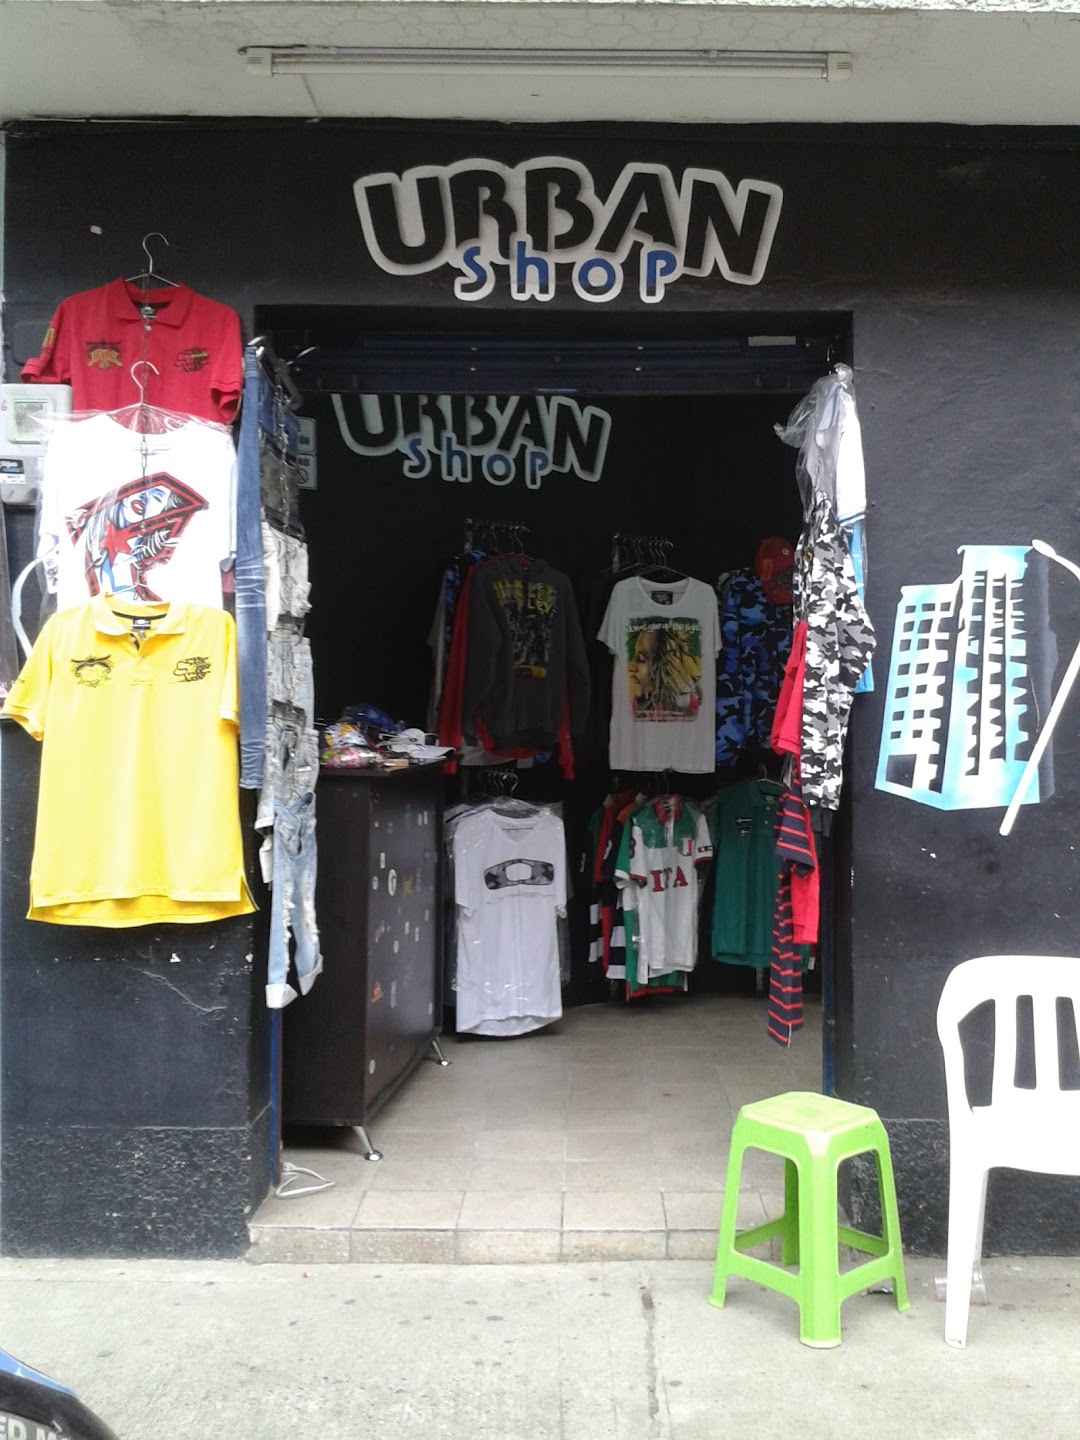 URBAN shop